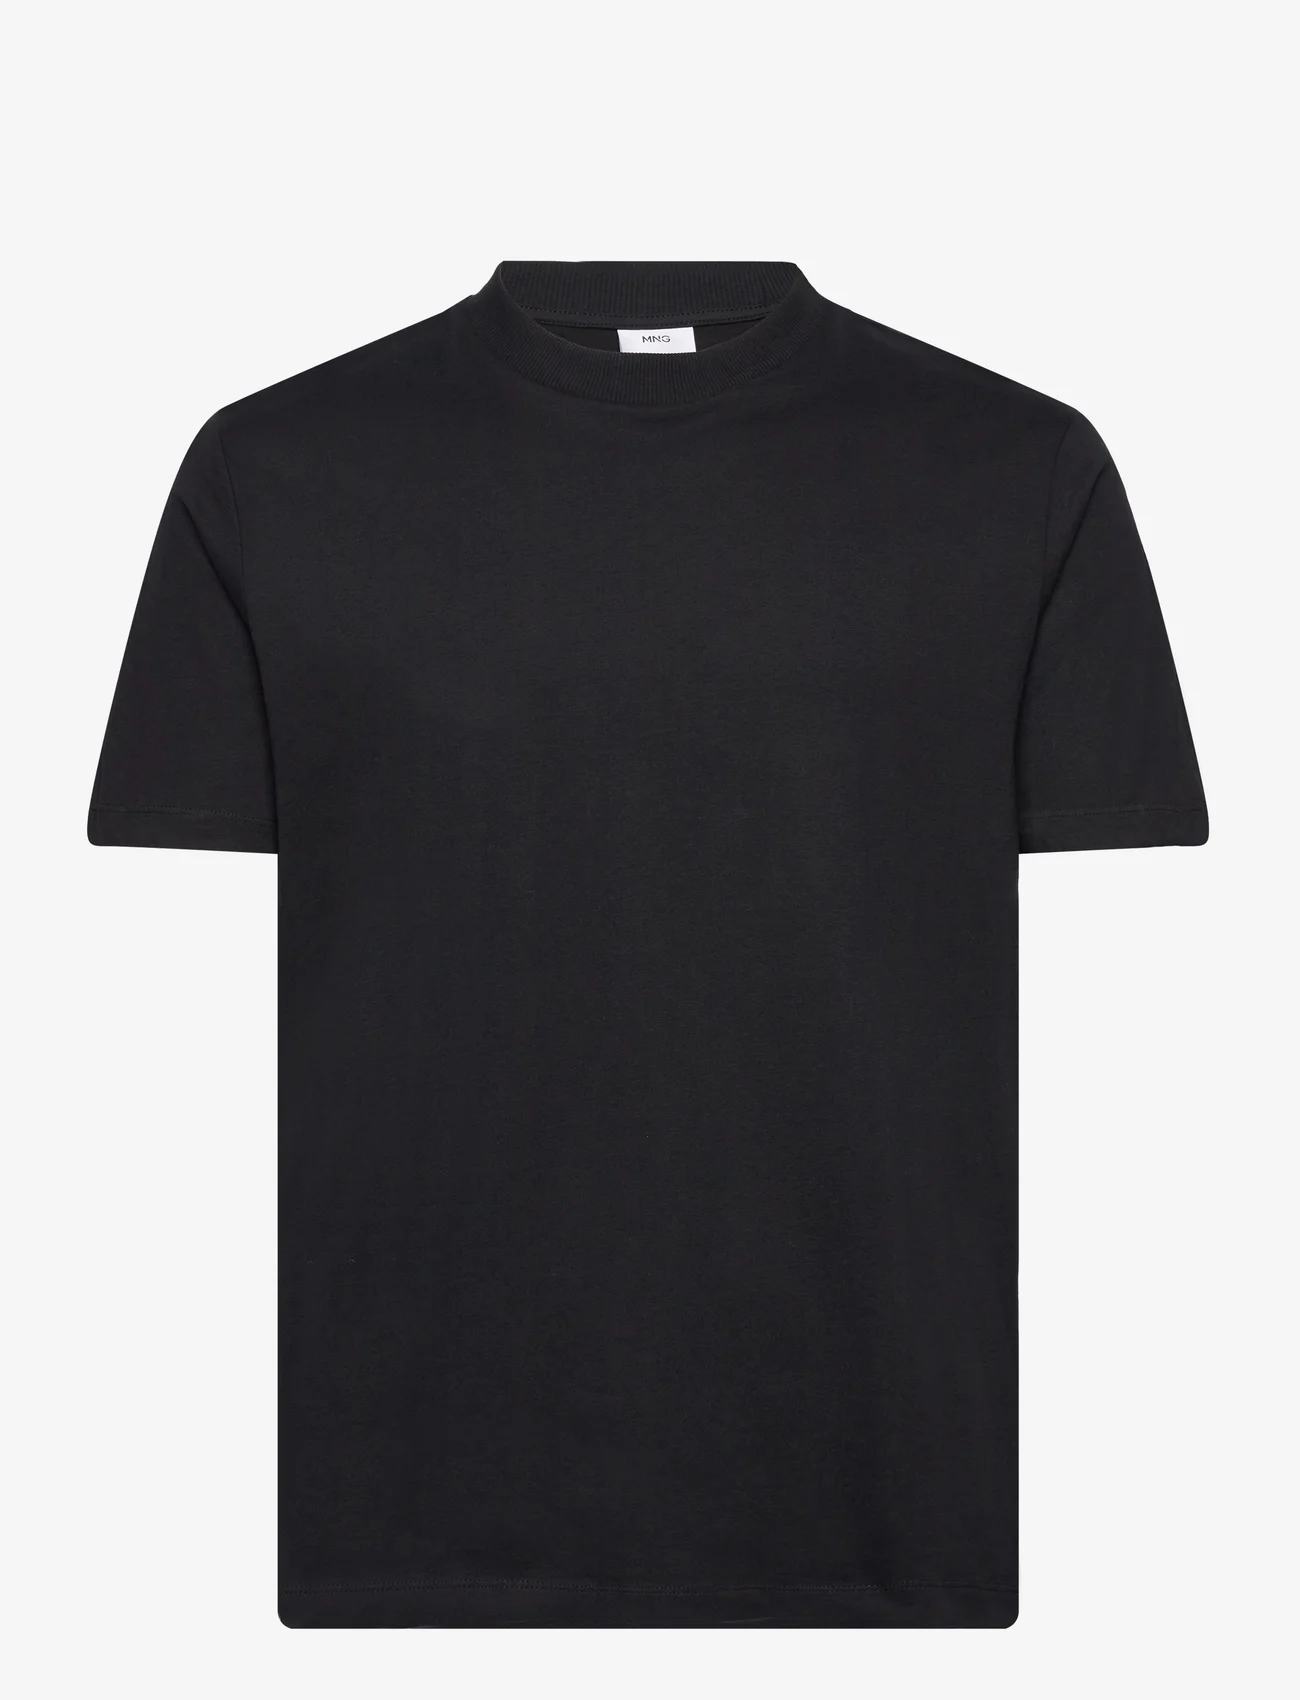 Mango - Basic 100% cotton t-shirt - lägsta priserna - black - 0